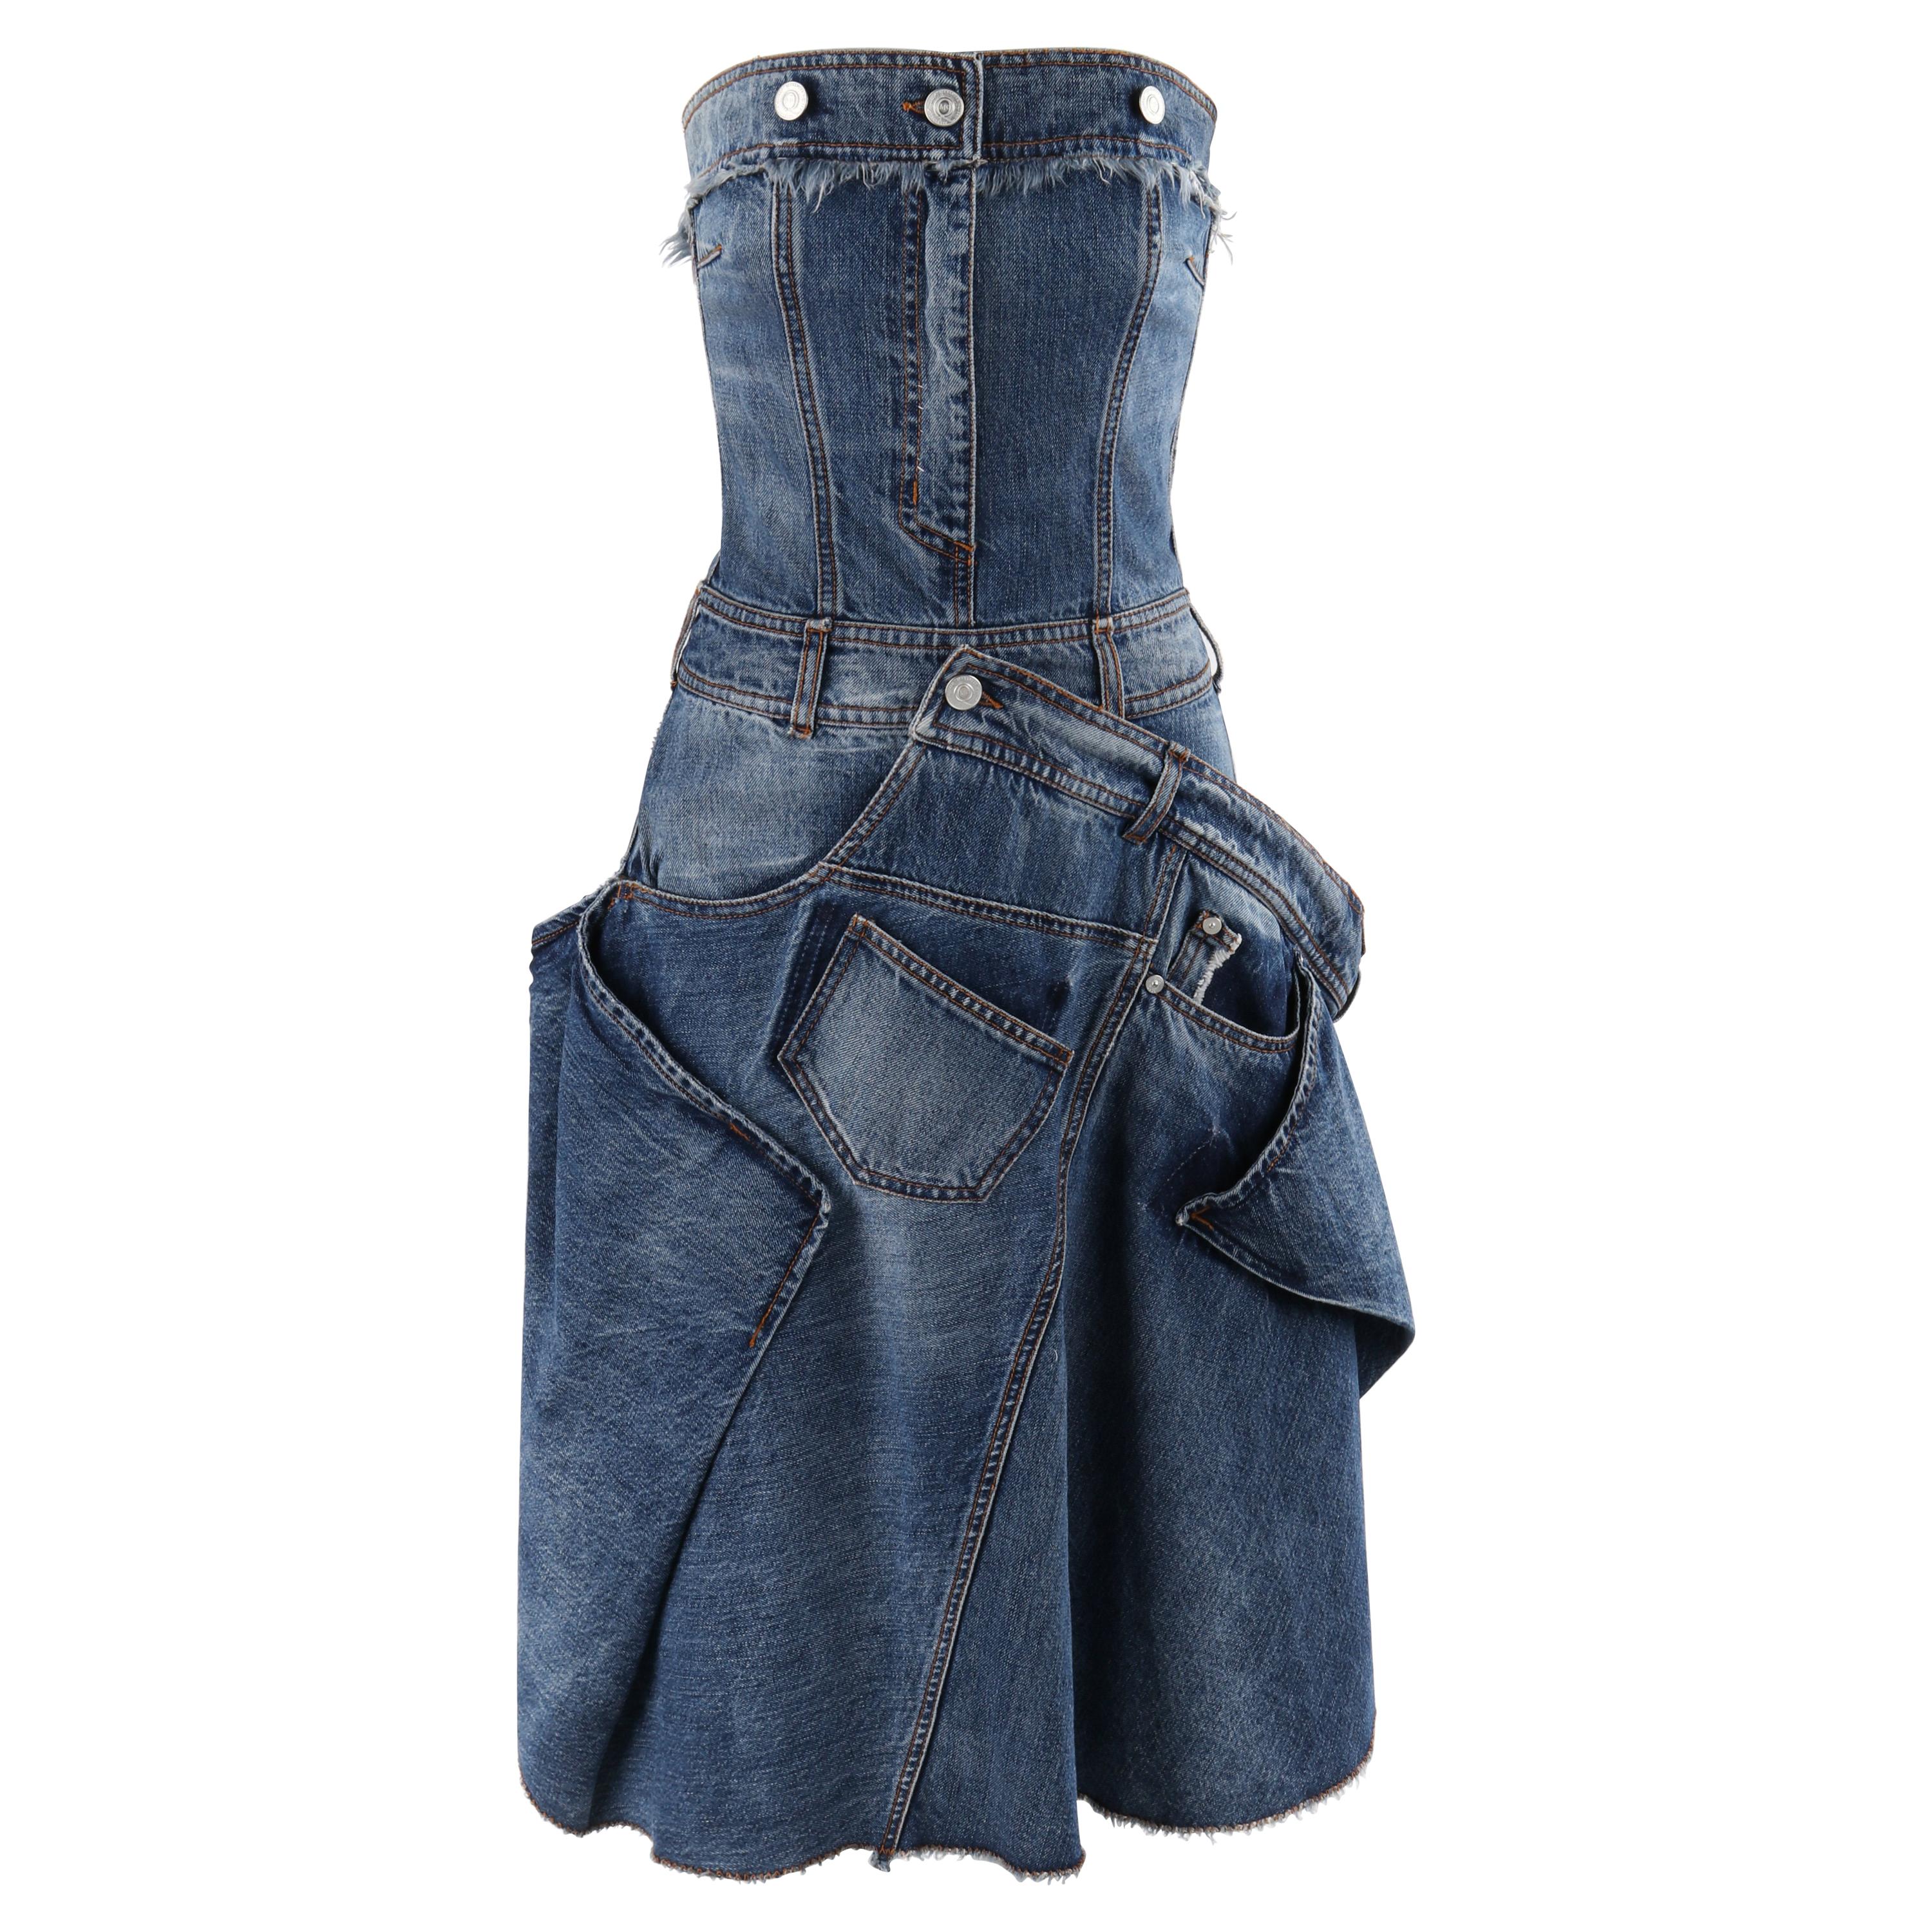 ALEXANDER McQUEEN A/W 2010 Patchwork Deconstructed Denim Jeans Strapless Dress For Sale